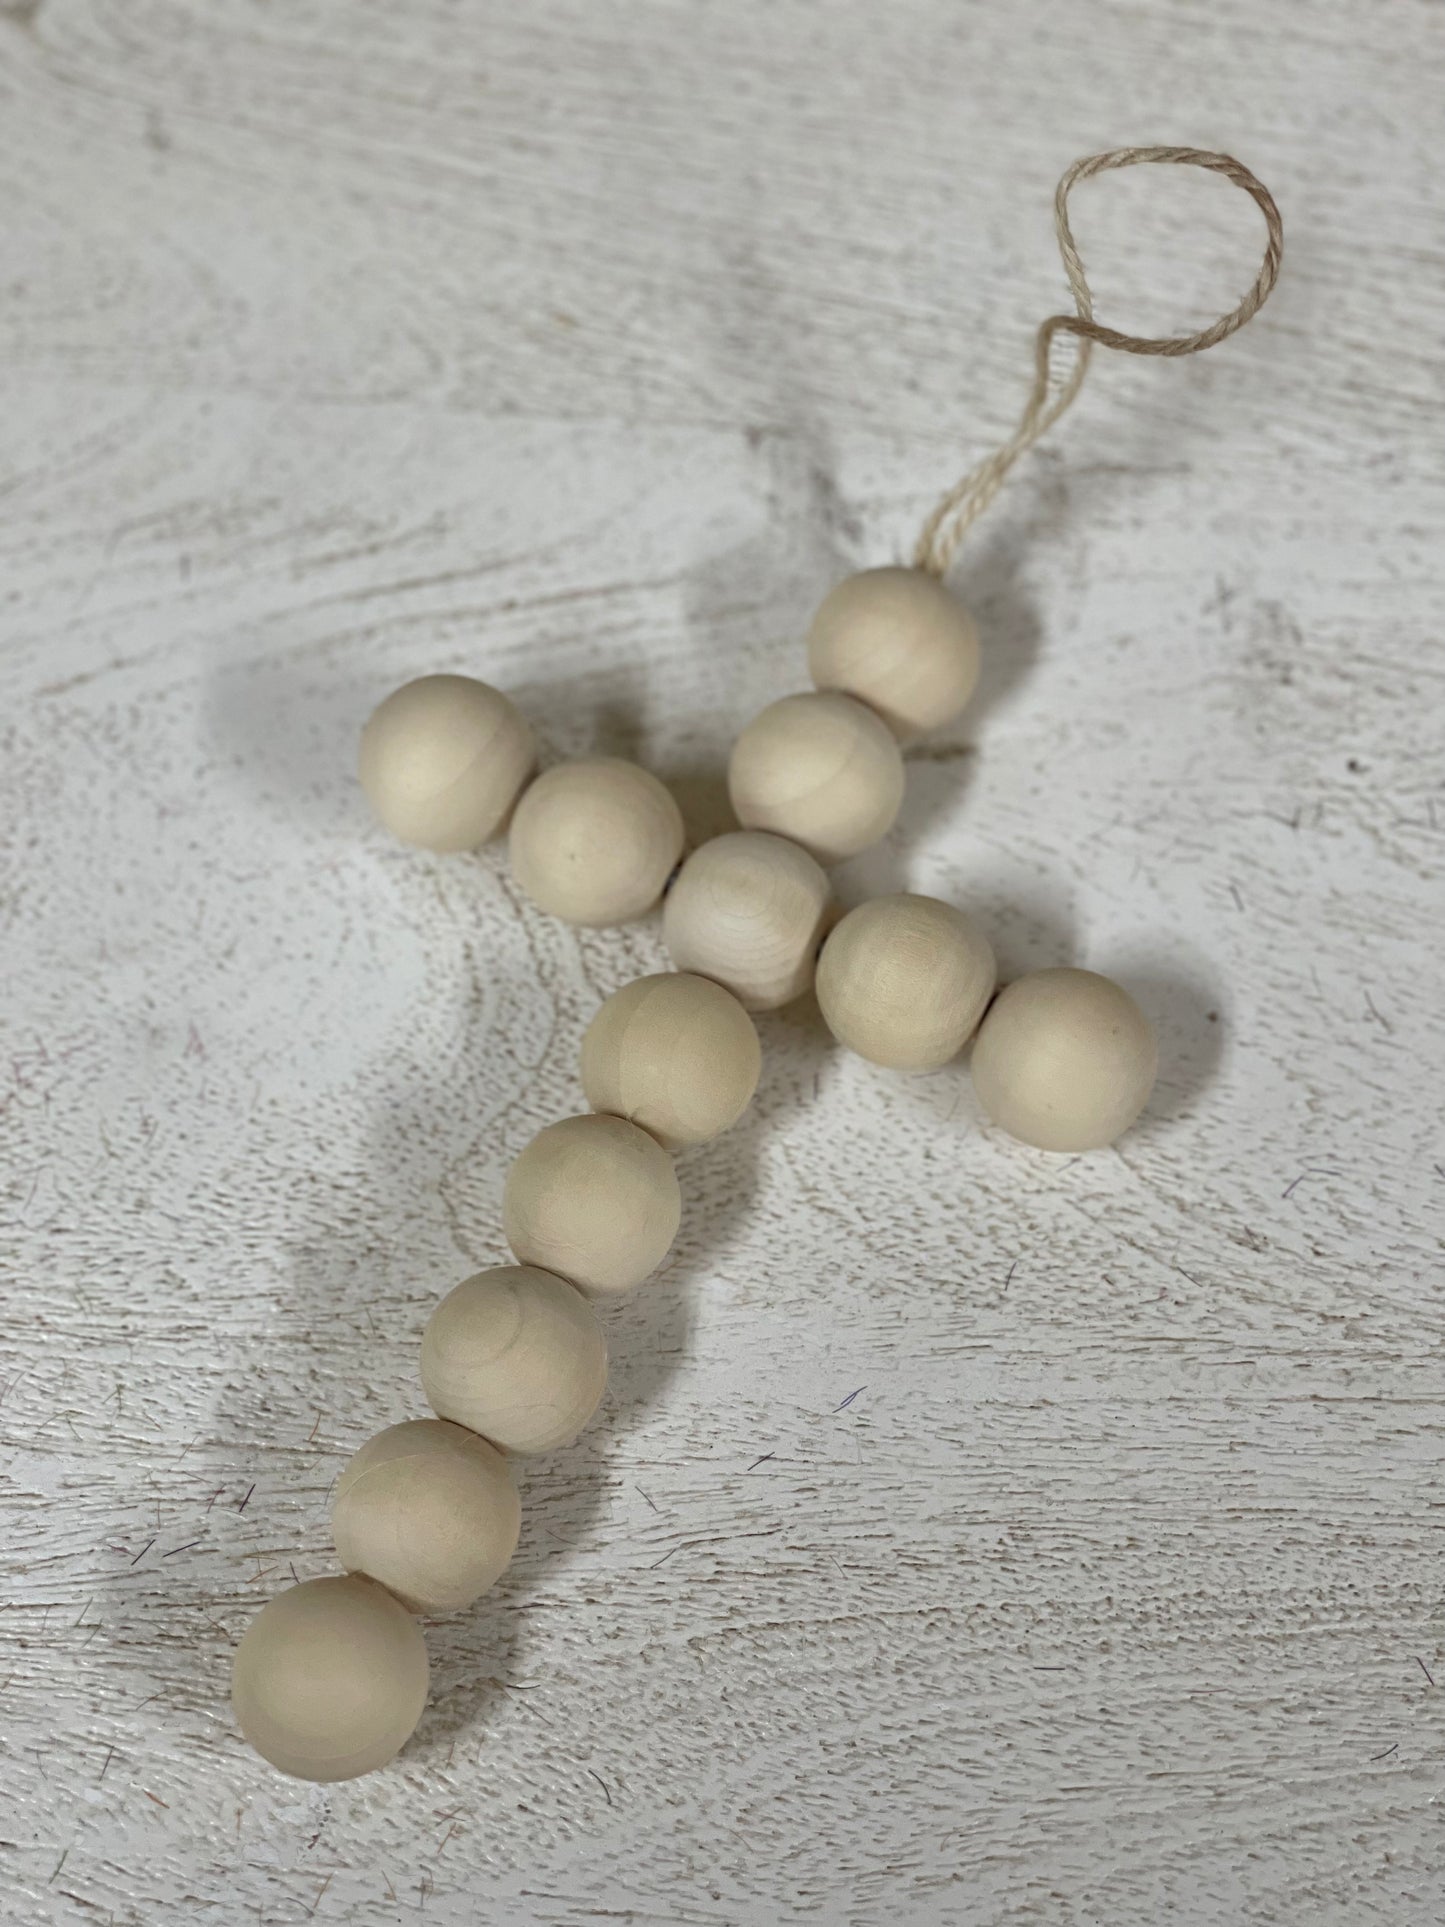 8 Inch Natural Wood Bead Cross Ornament